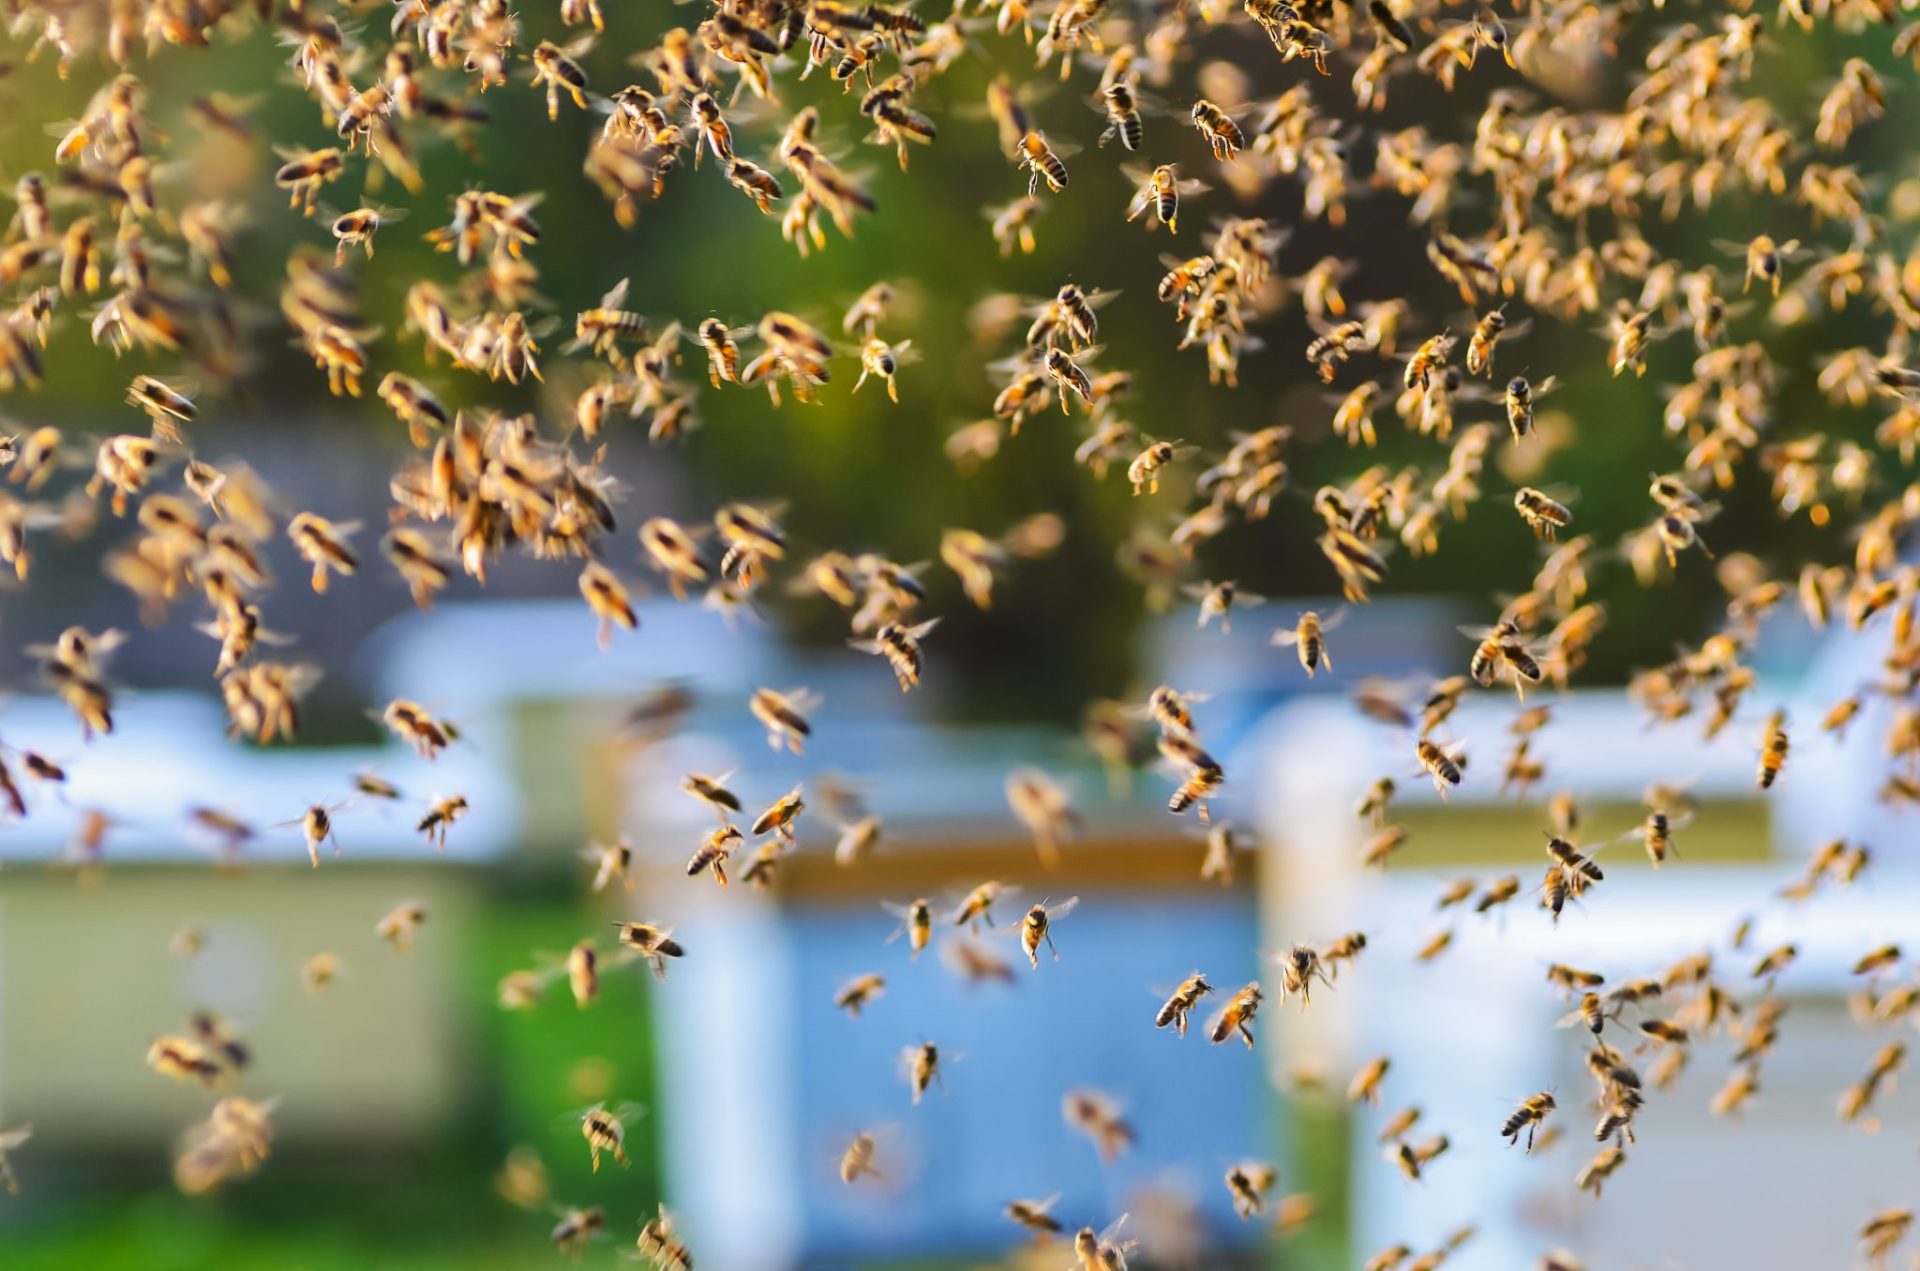 Honeybee Swarm Control - How does swarming occur